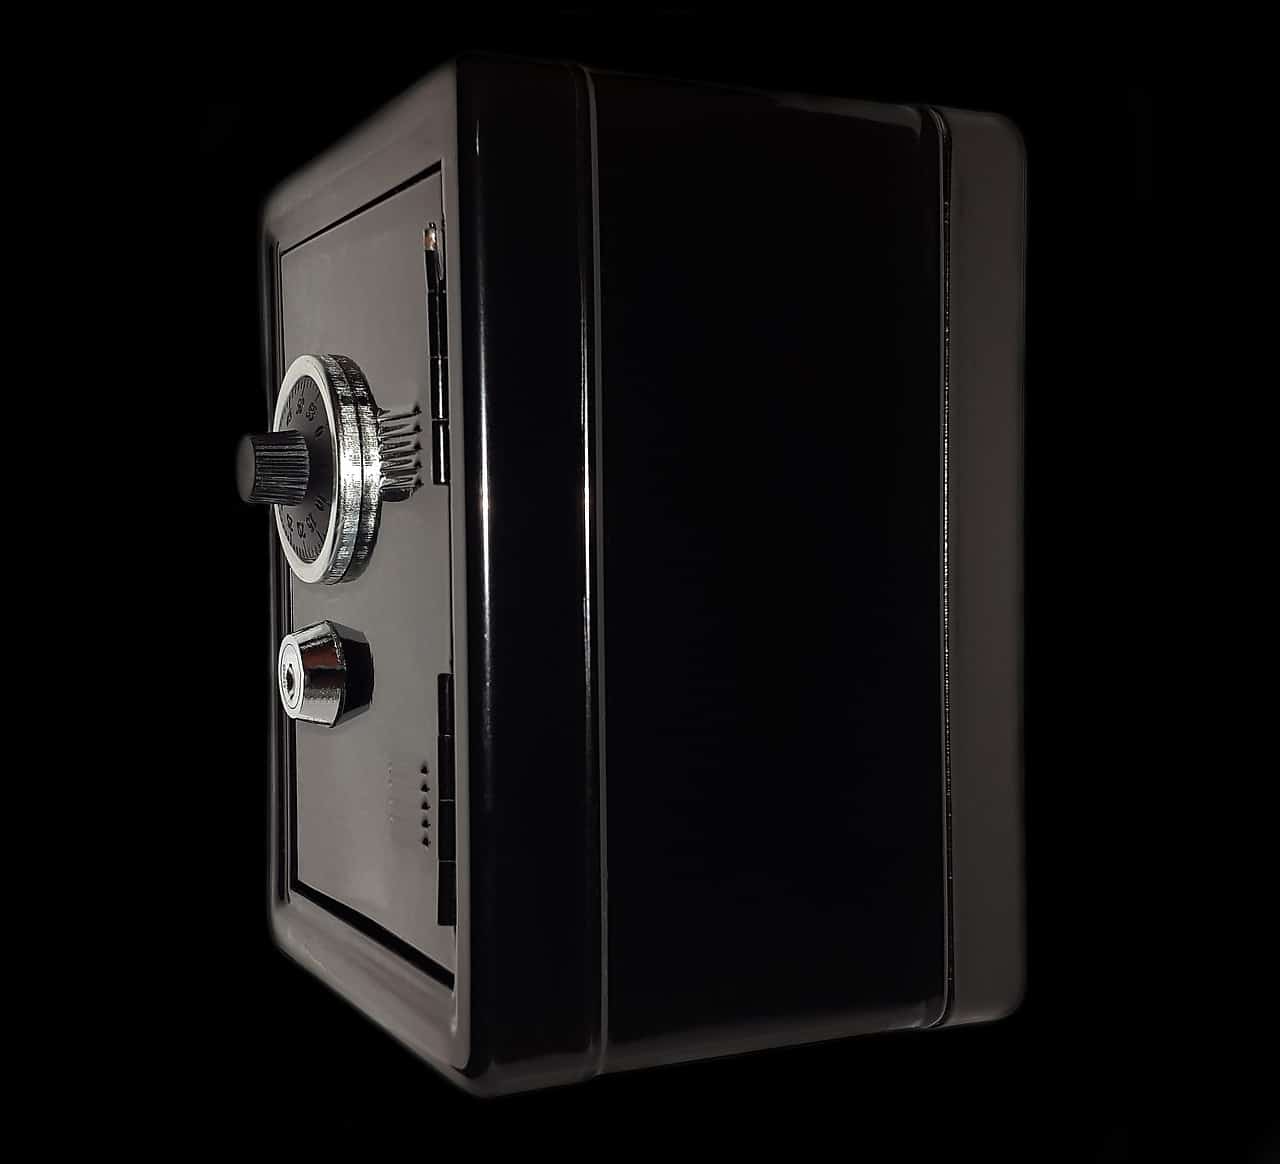 A black home safe box sitting against a black background.